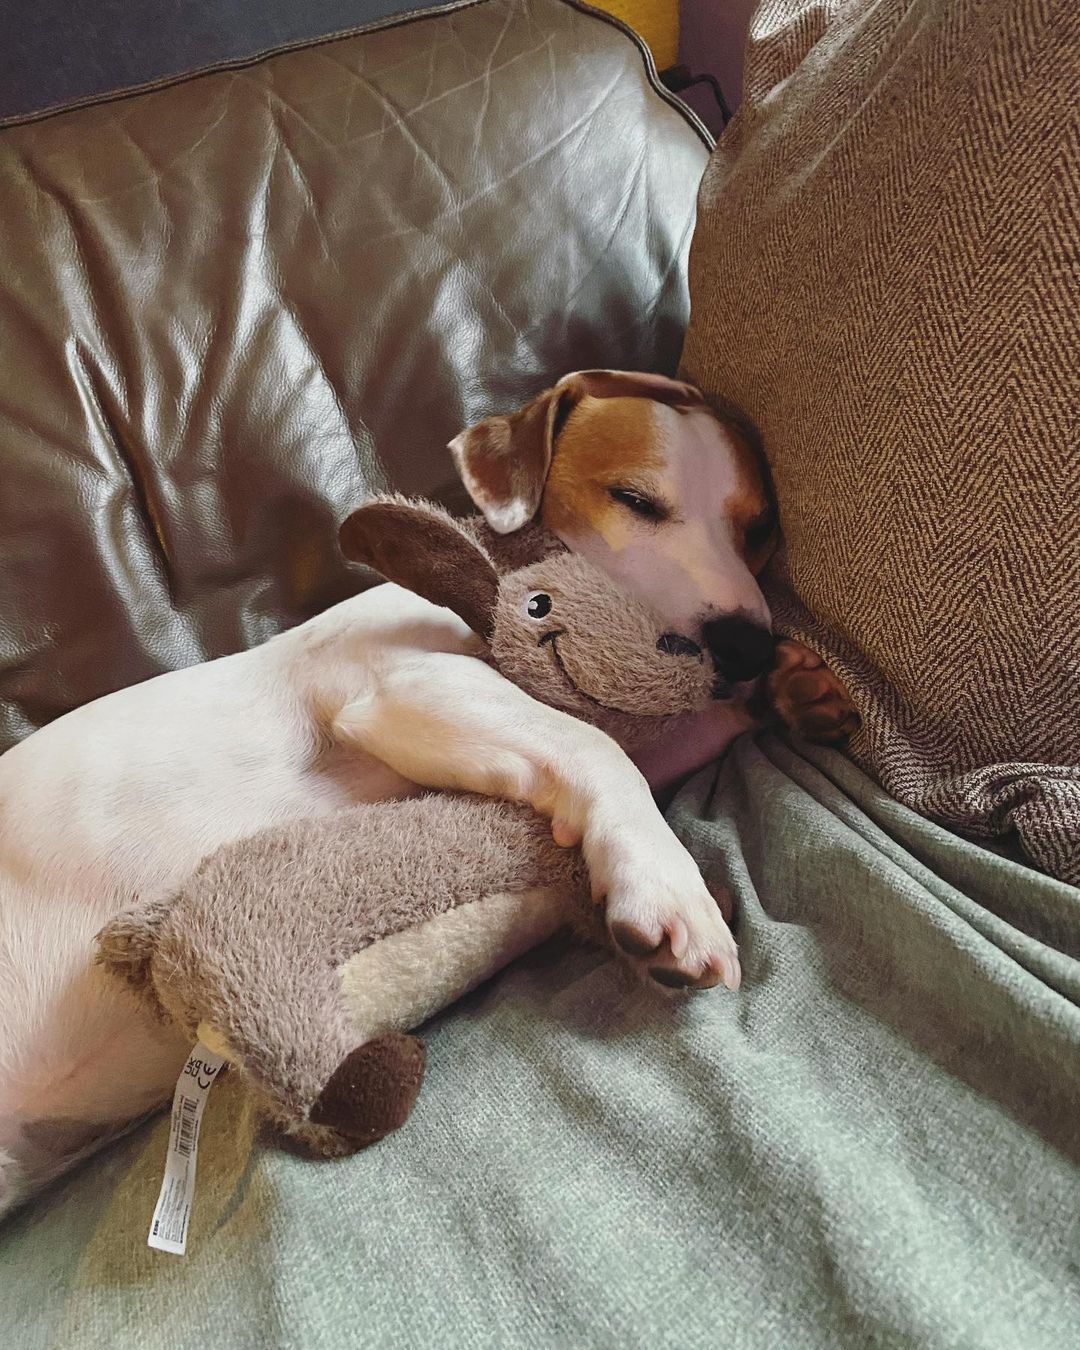 Dog hugging its rabbit toy